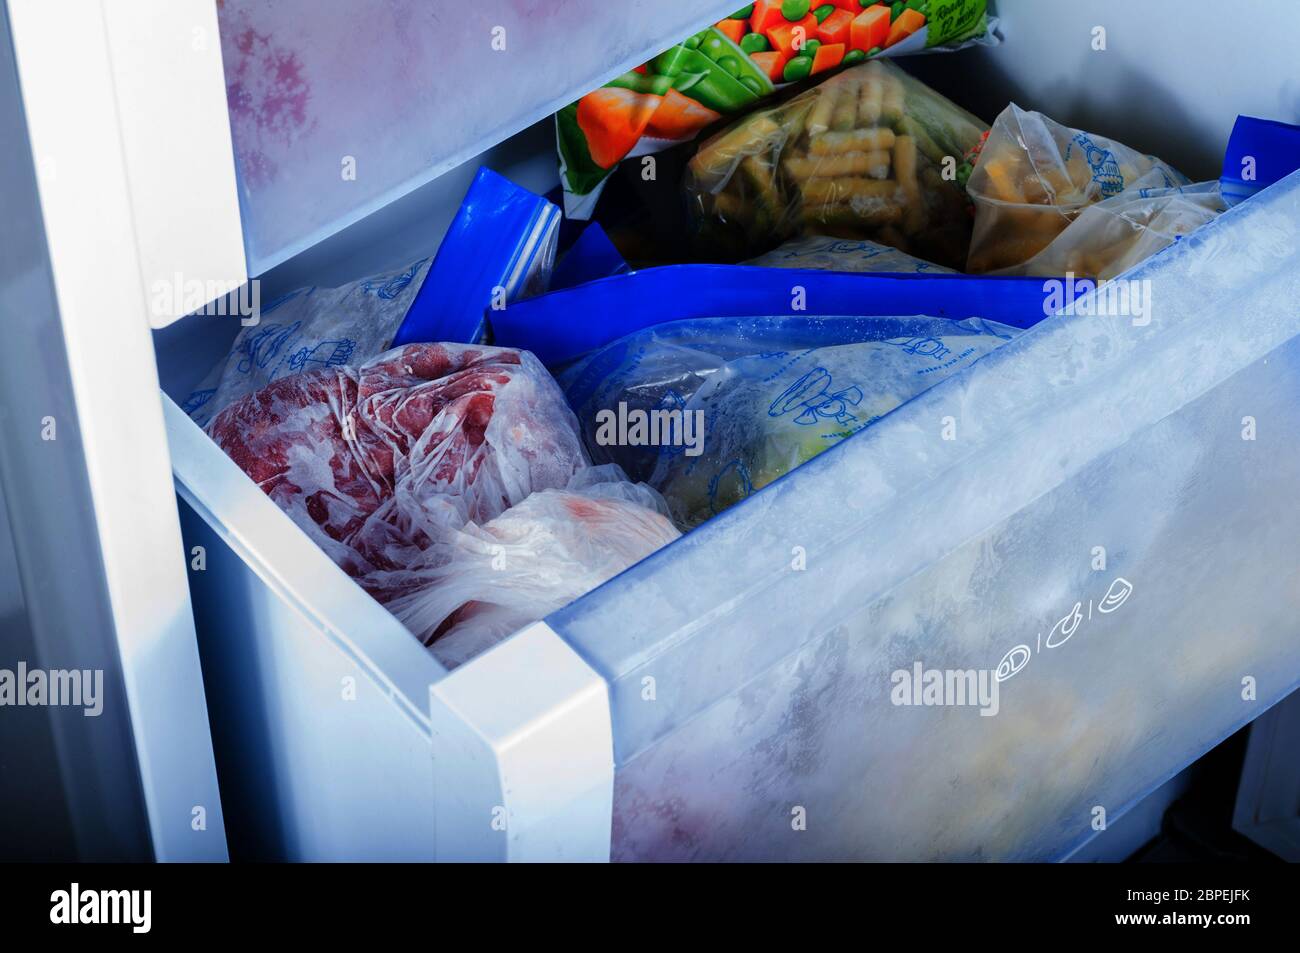 https://c8.alamy.com/comp/2BPEJFK/frozen-vegetables-in-freezer-2BPEJFK.jpg